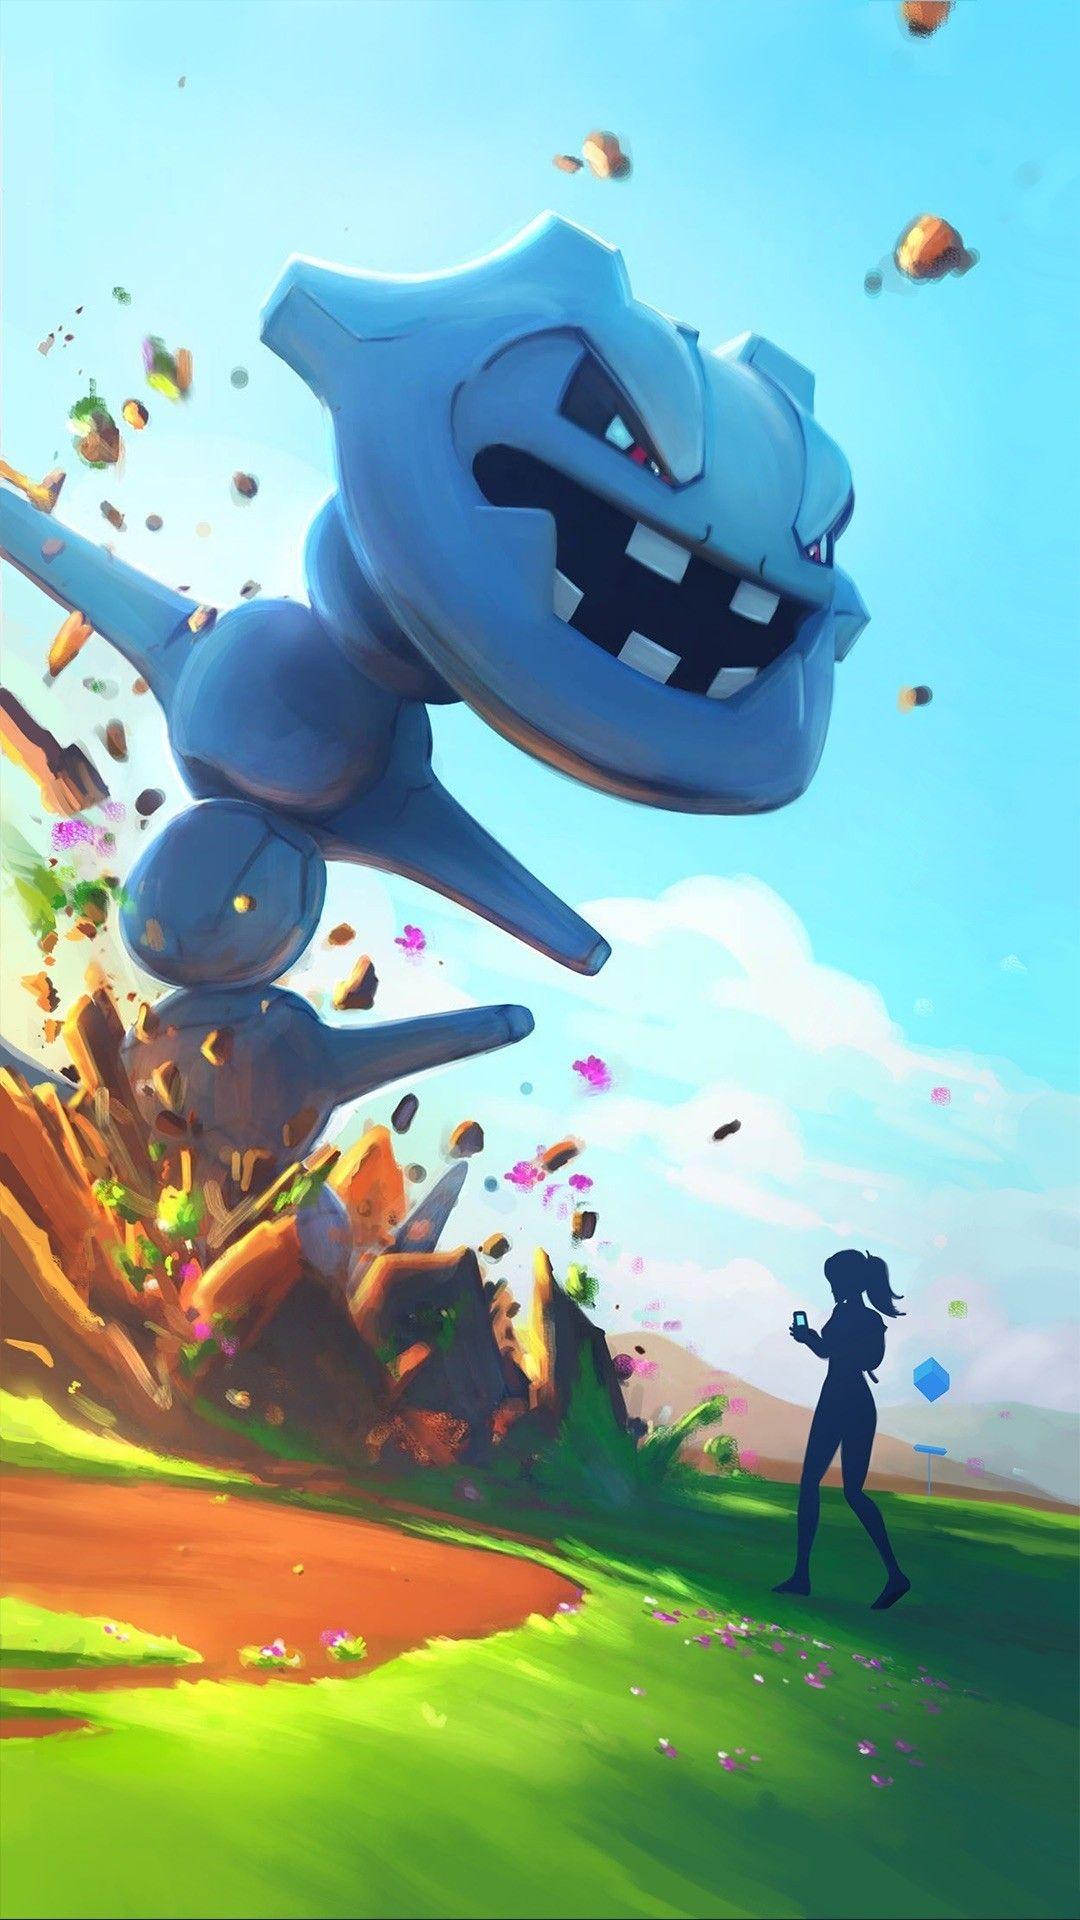 Official Pokémon Go wallpaper for 2021